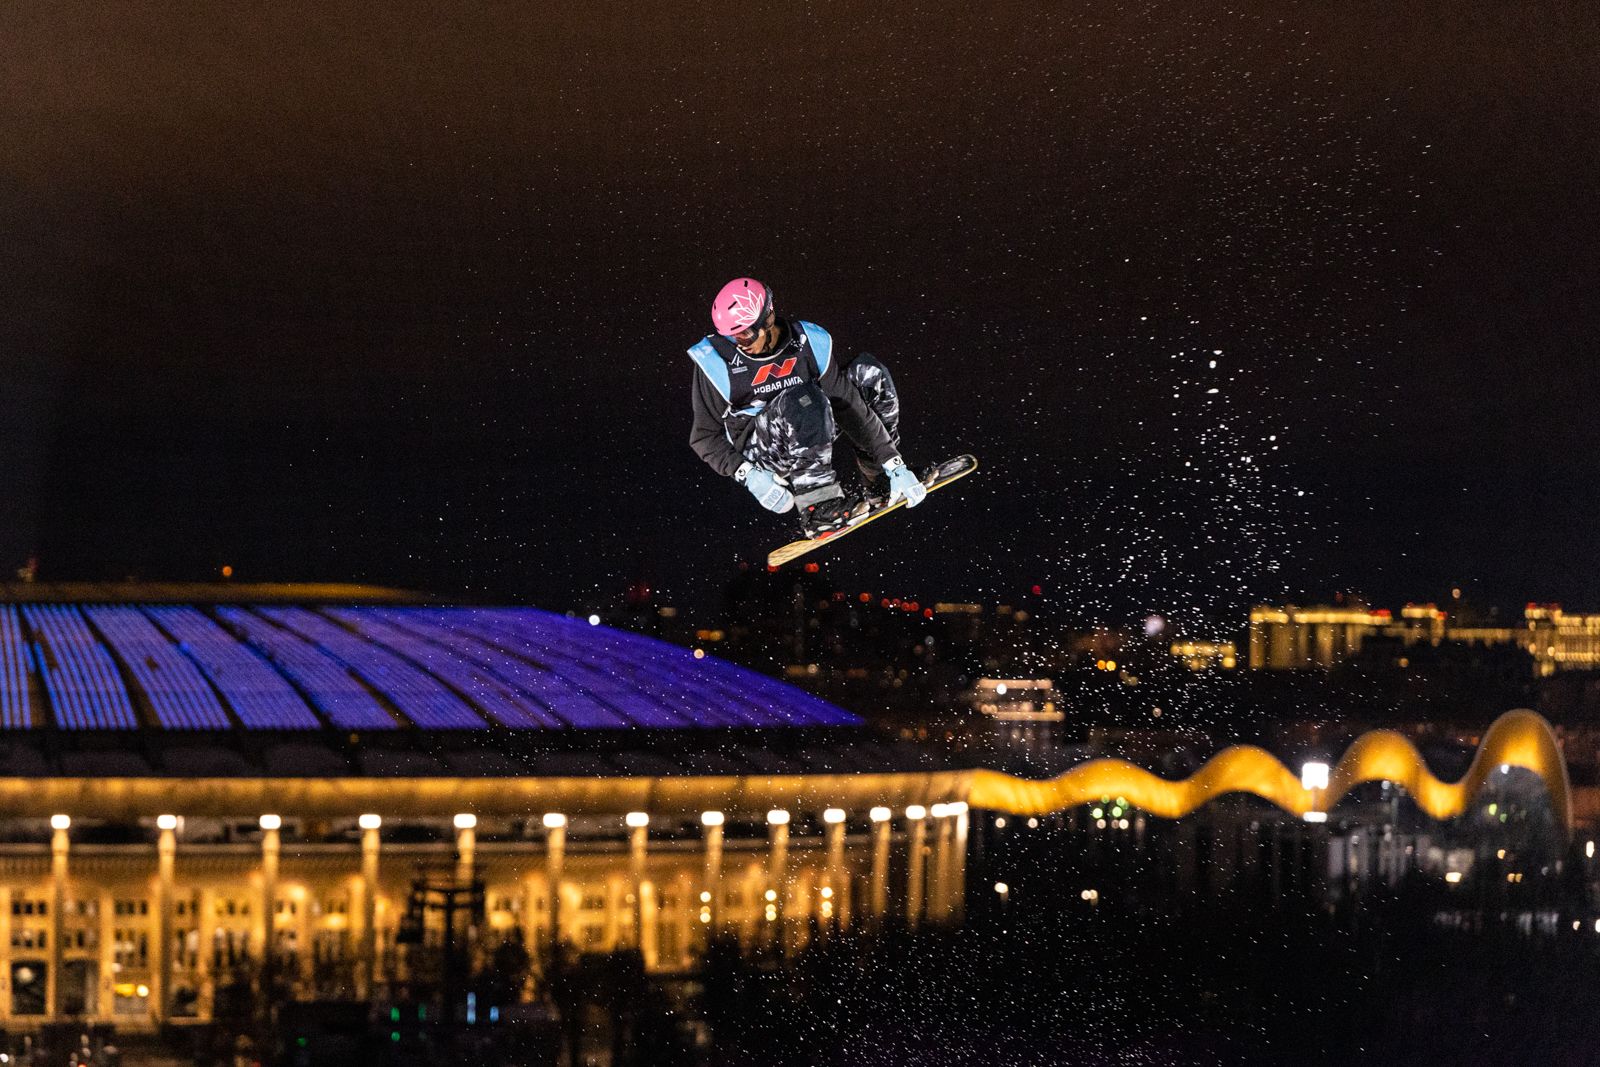 спорт, сноубординг, бигэйр, bigair, snowboarding, sports, extreme, Komlev Sergei